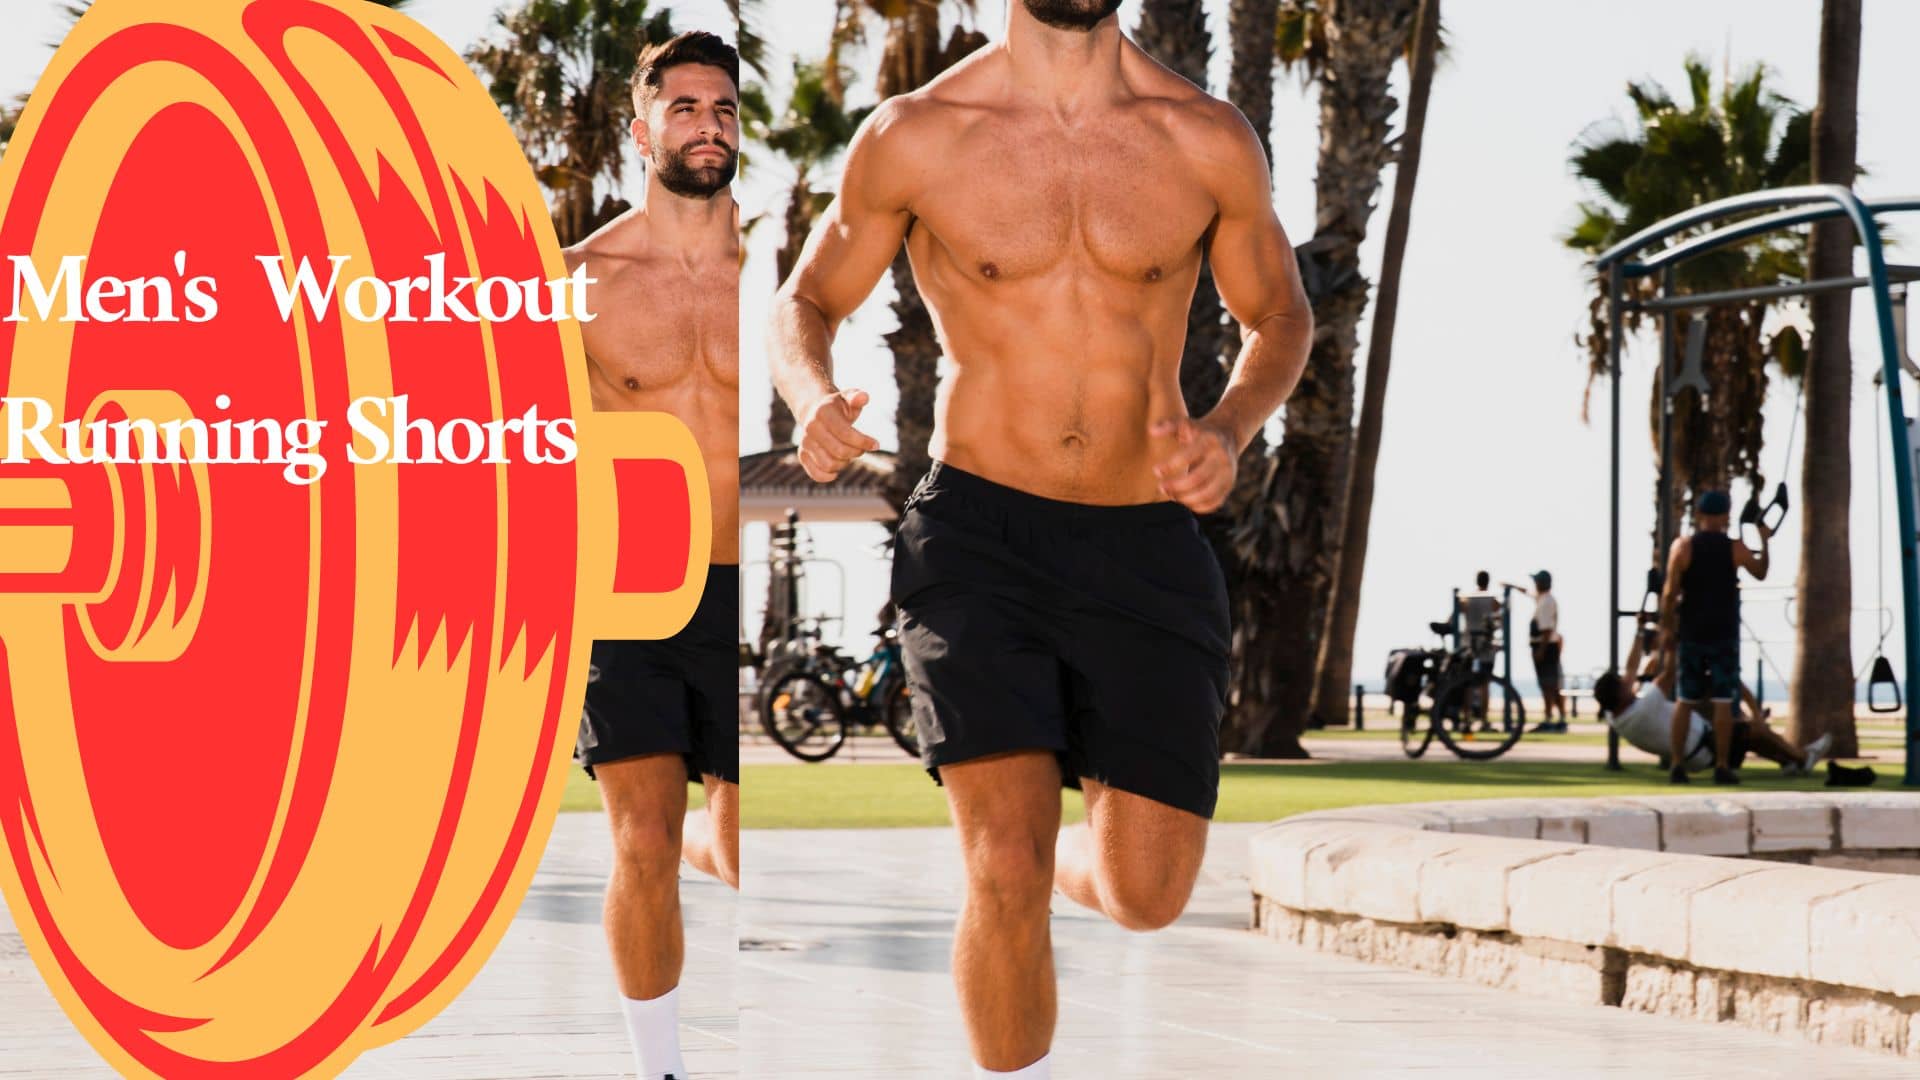 Men's Workout Running Shorts